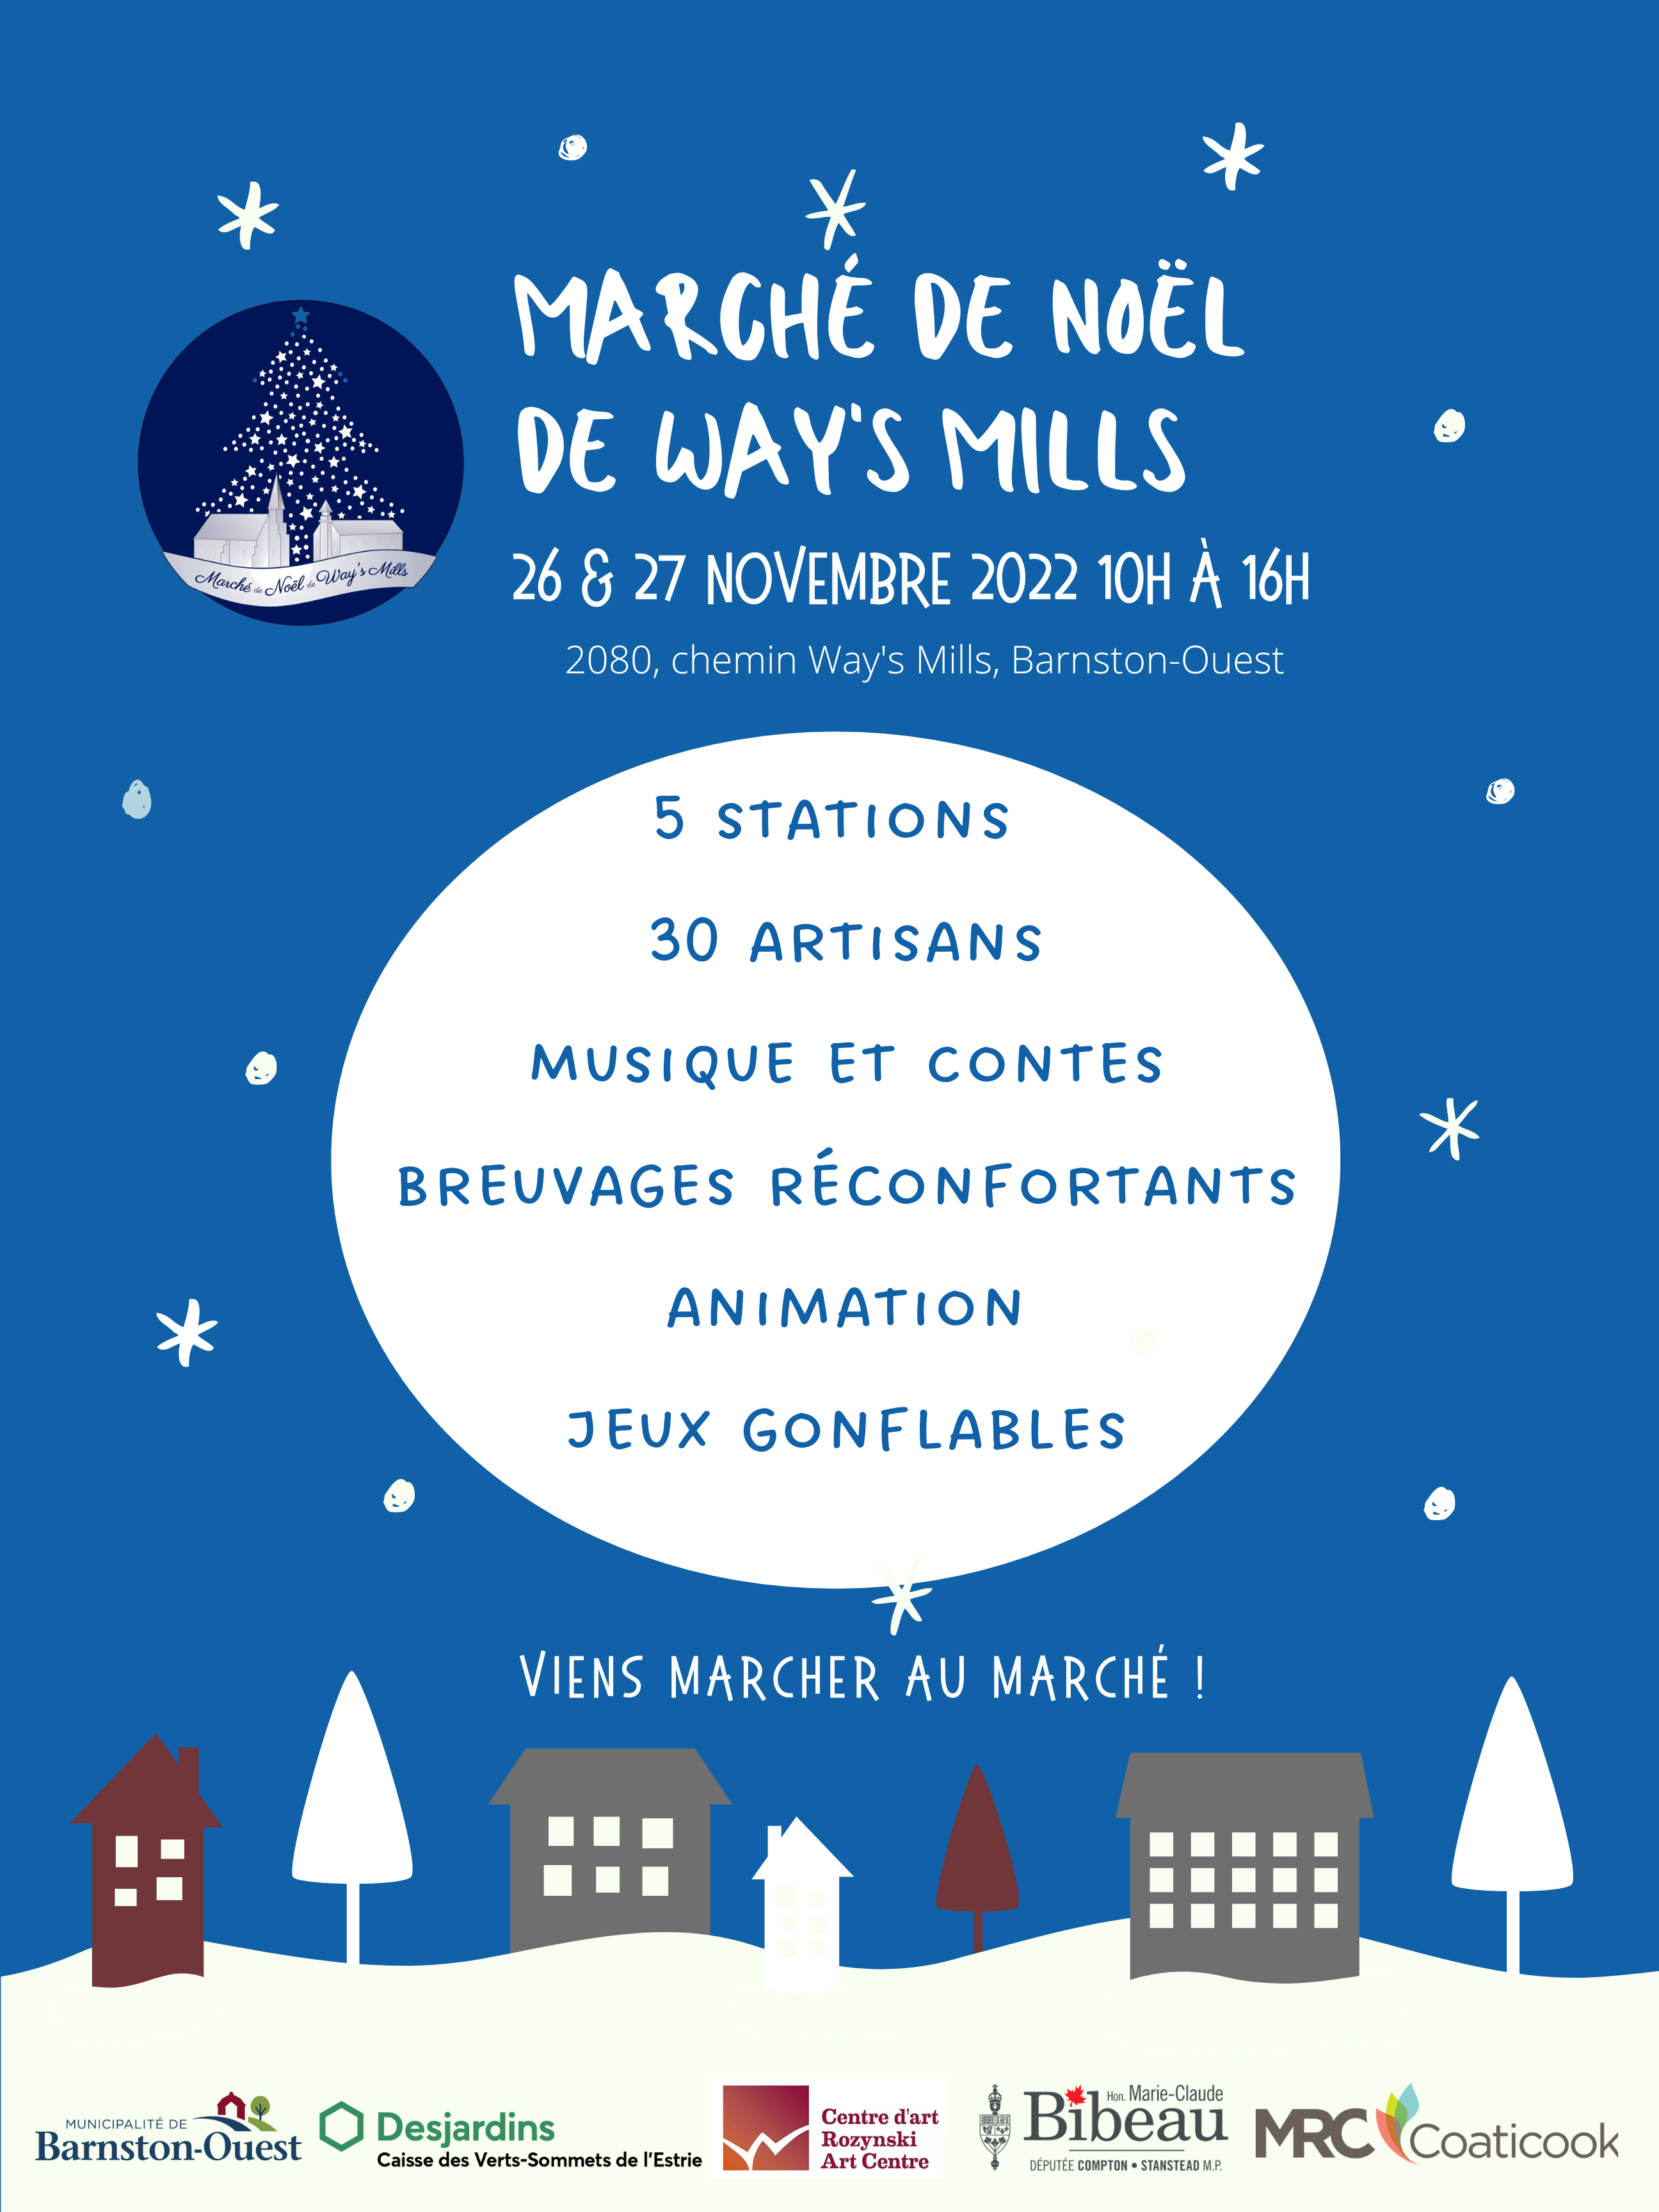 Marché de Noël de Way's Mills